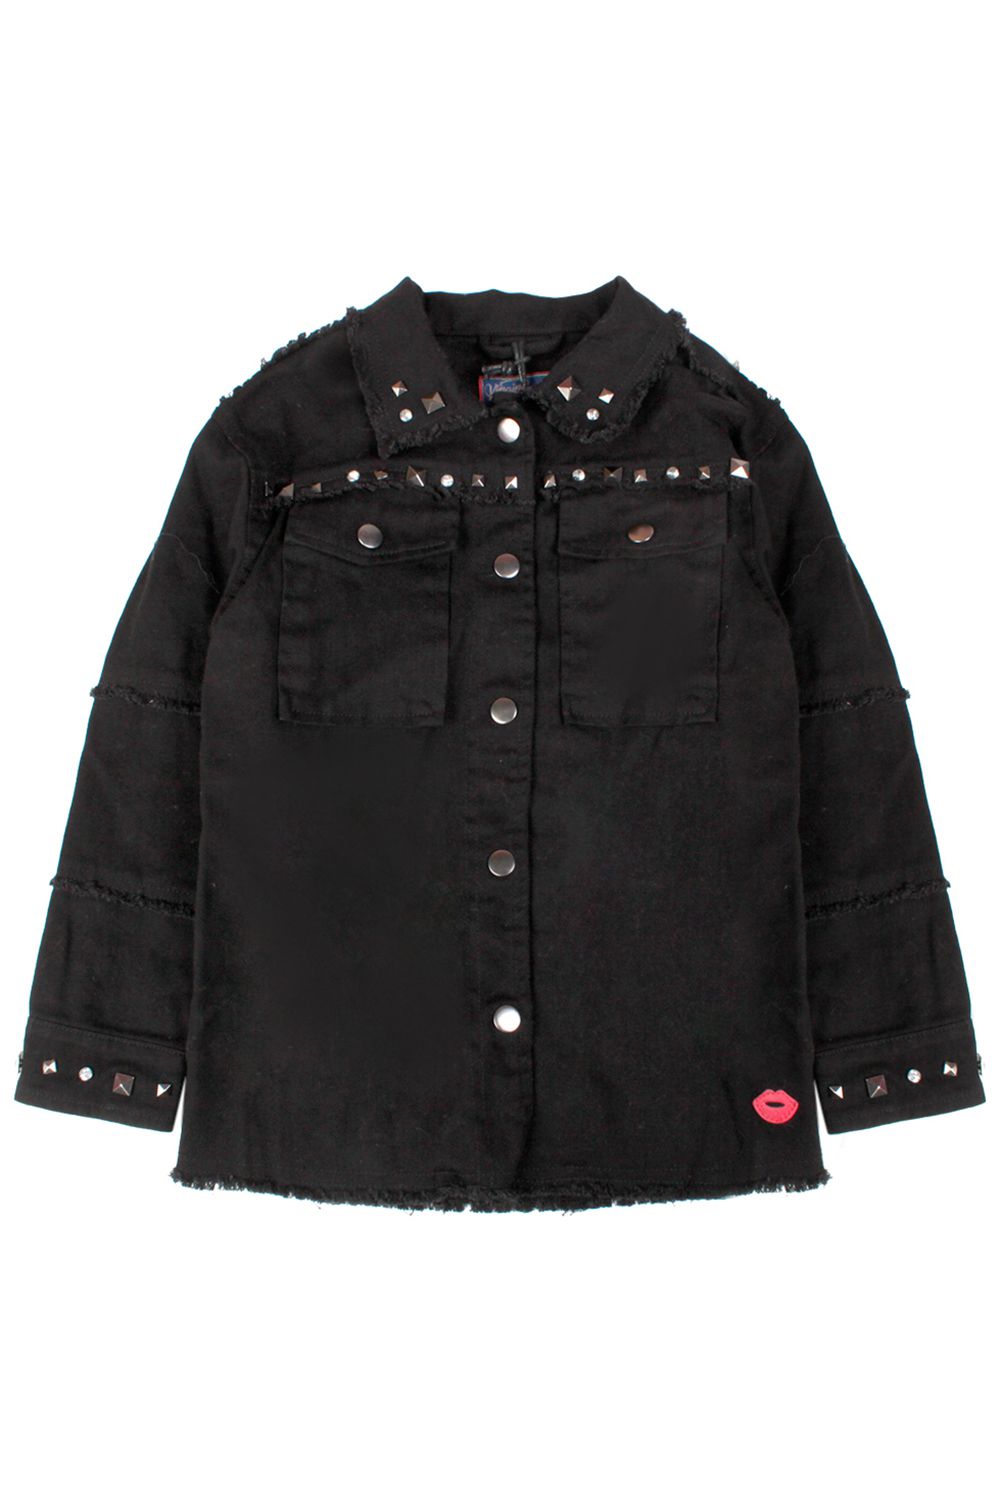 Куртка Vingino, размер 128, цвет черный AW18KGN15001 - фото 1